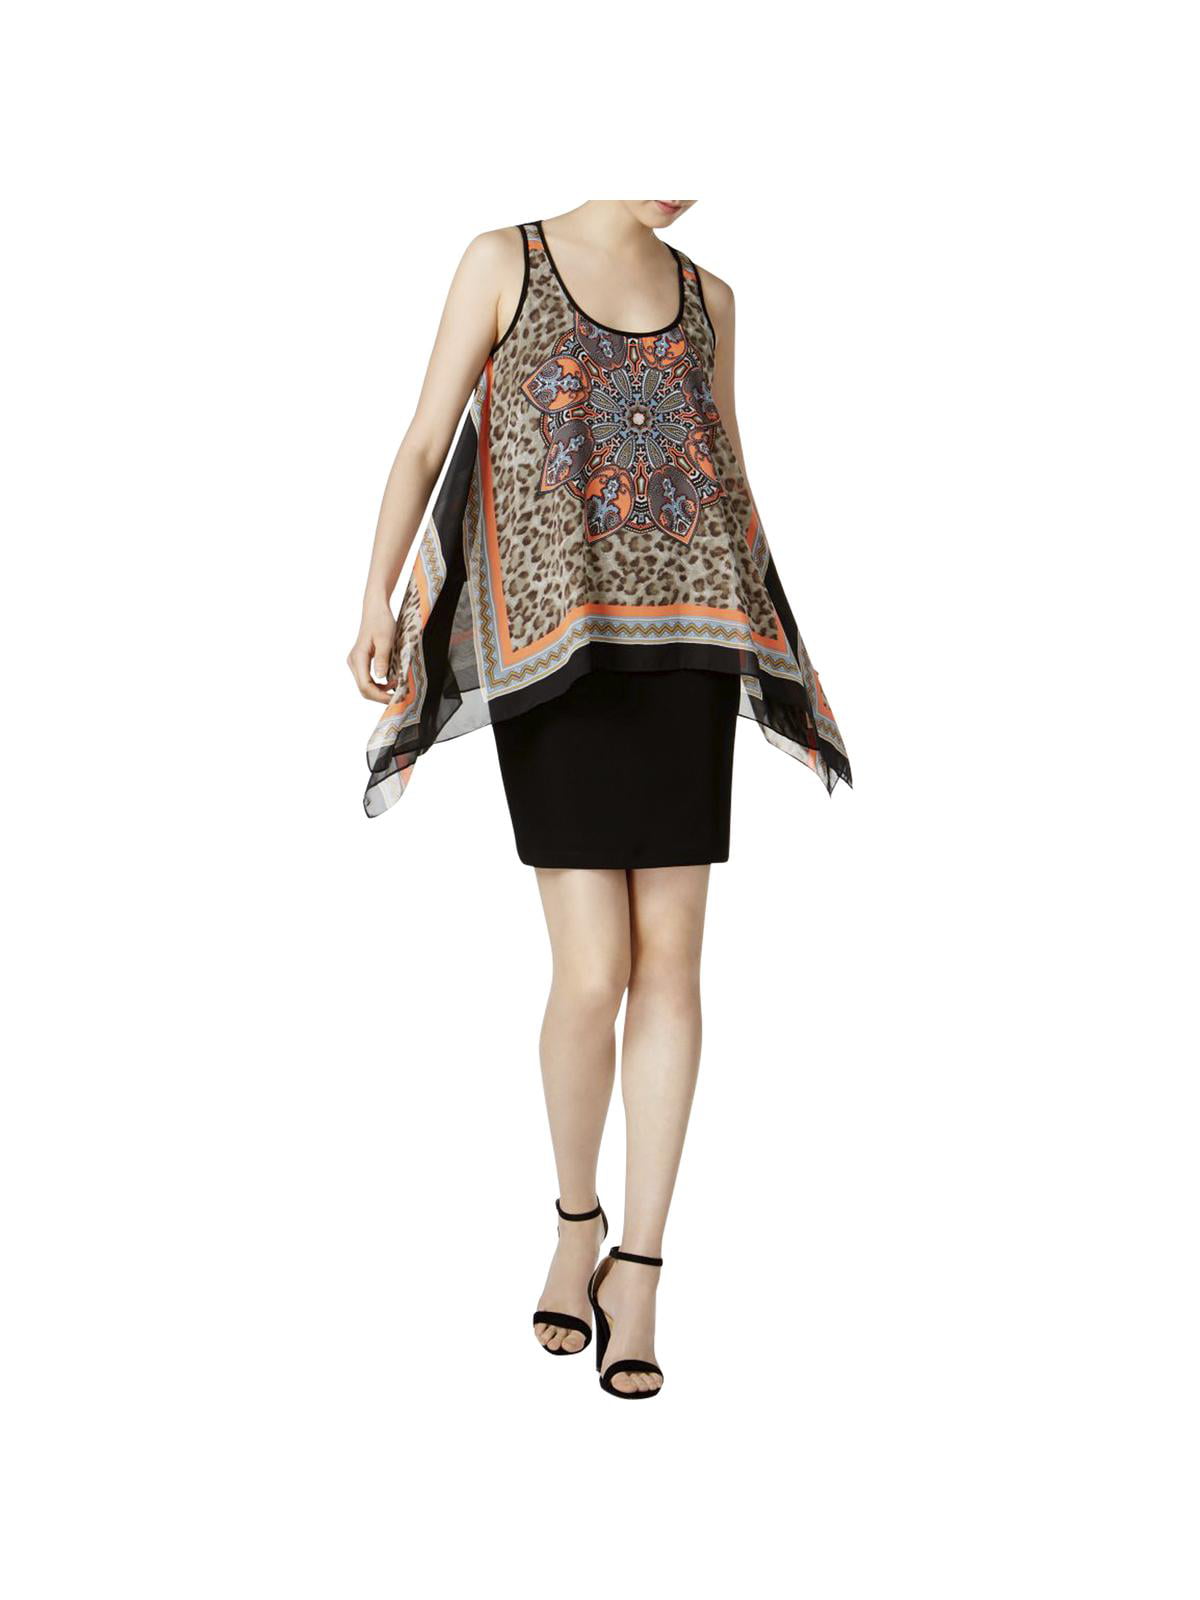 S.L Fashions Womens Geo-Printed Blouson Dress 